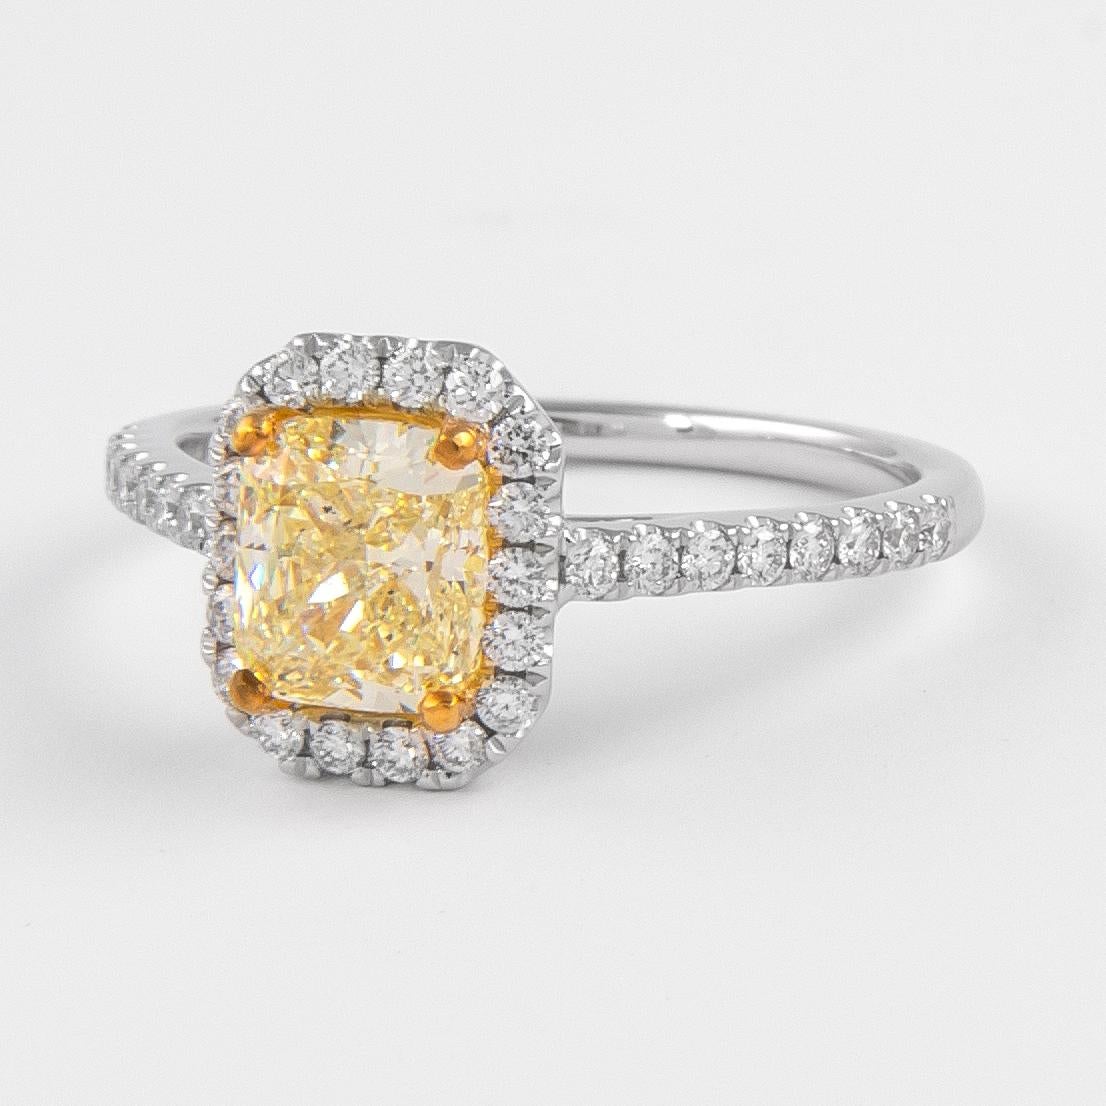 Contemporain Alexander GIA - Diamant jaune clair fantaisie de 1,23 carat avec halo en or bicolore 18 carats en vente